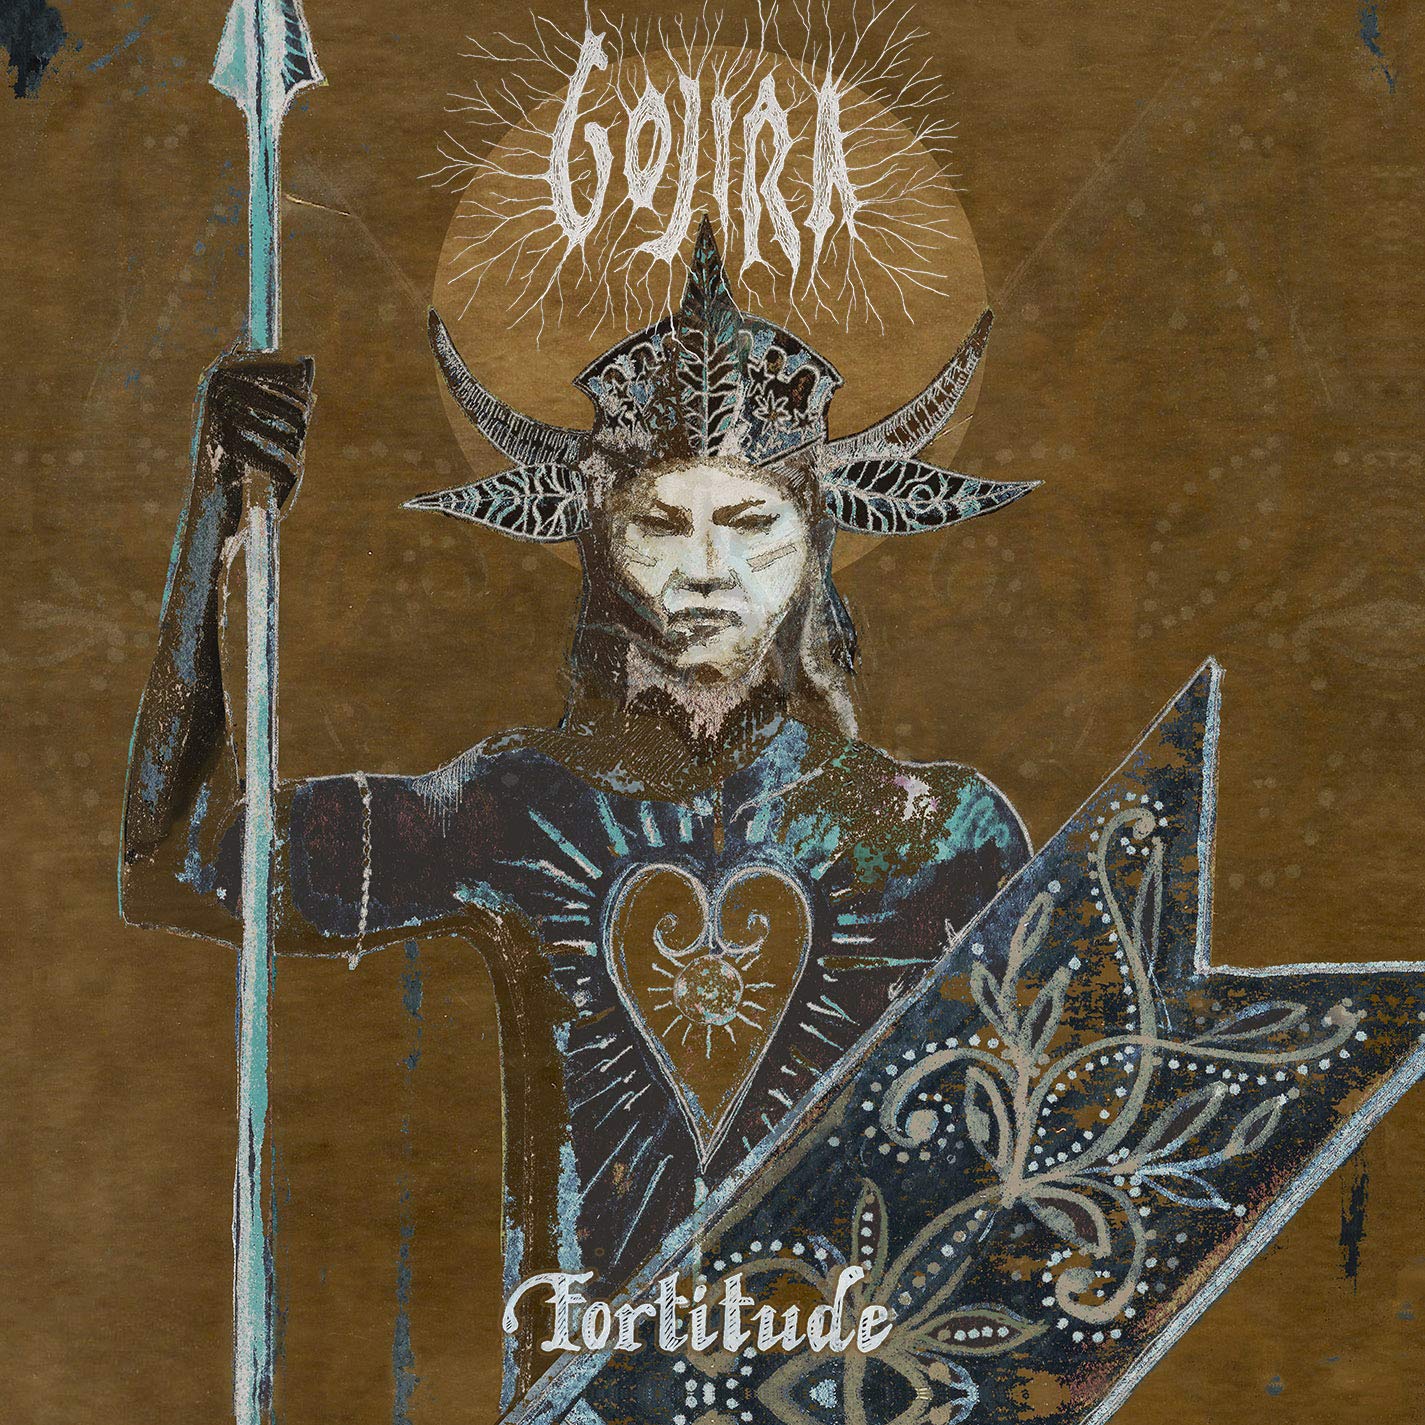 Gojira – Fortitude